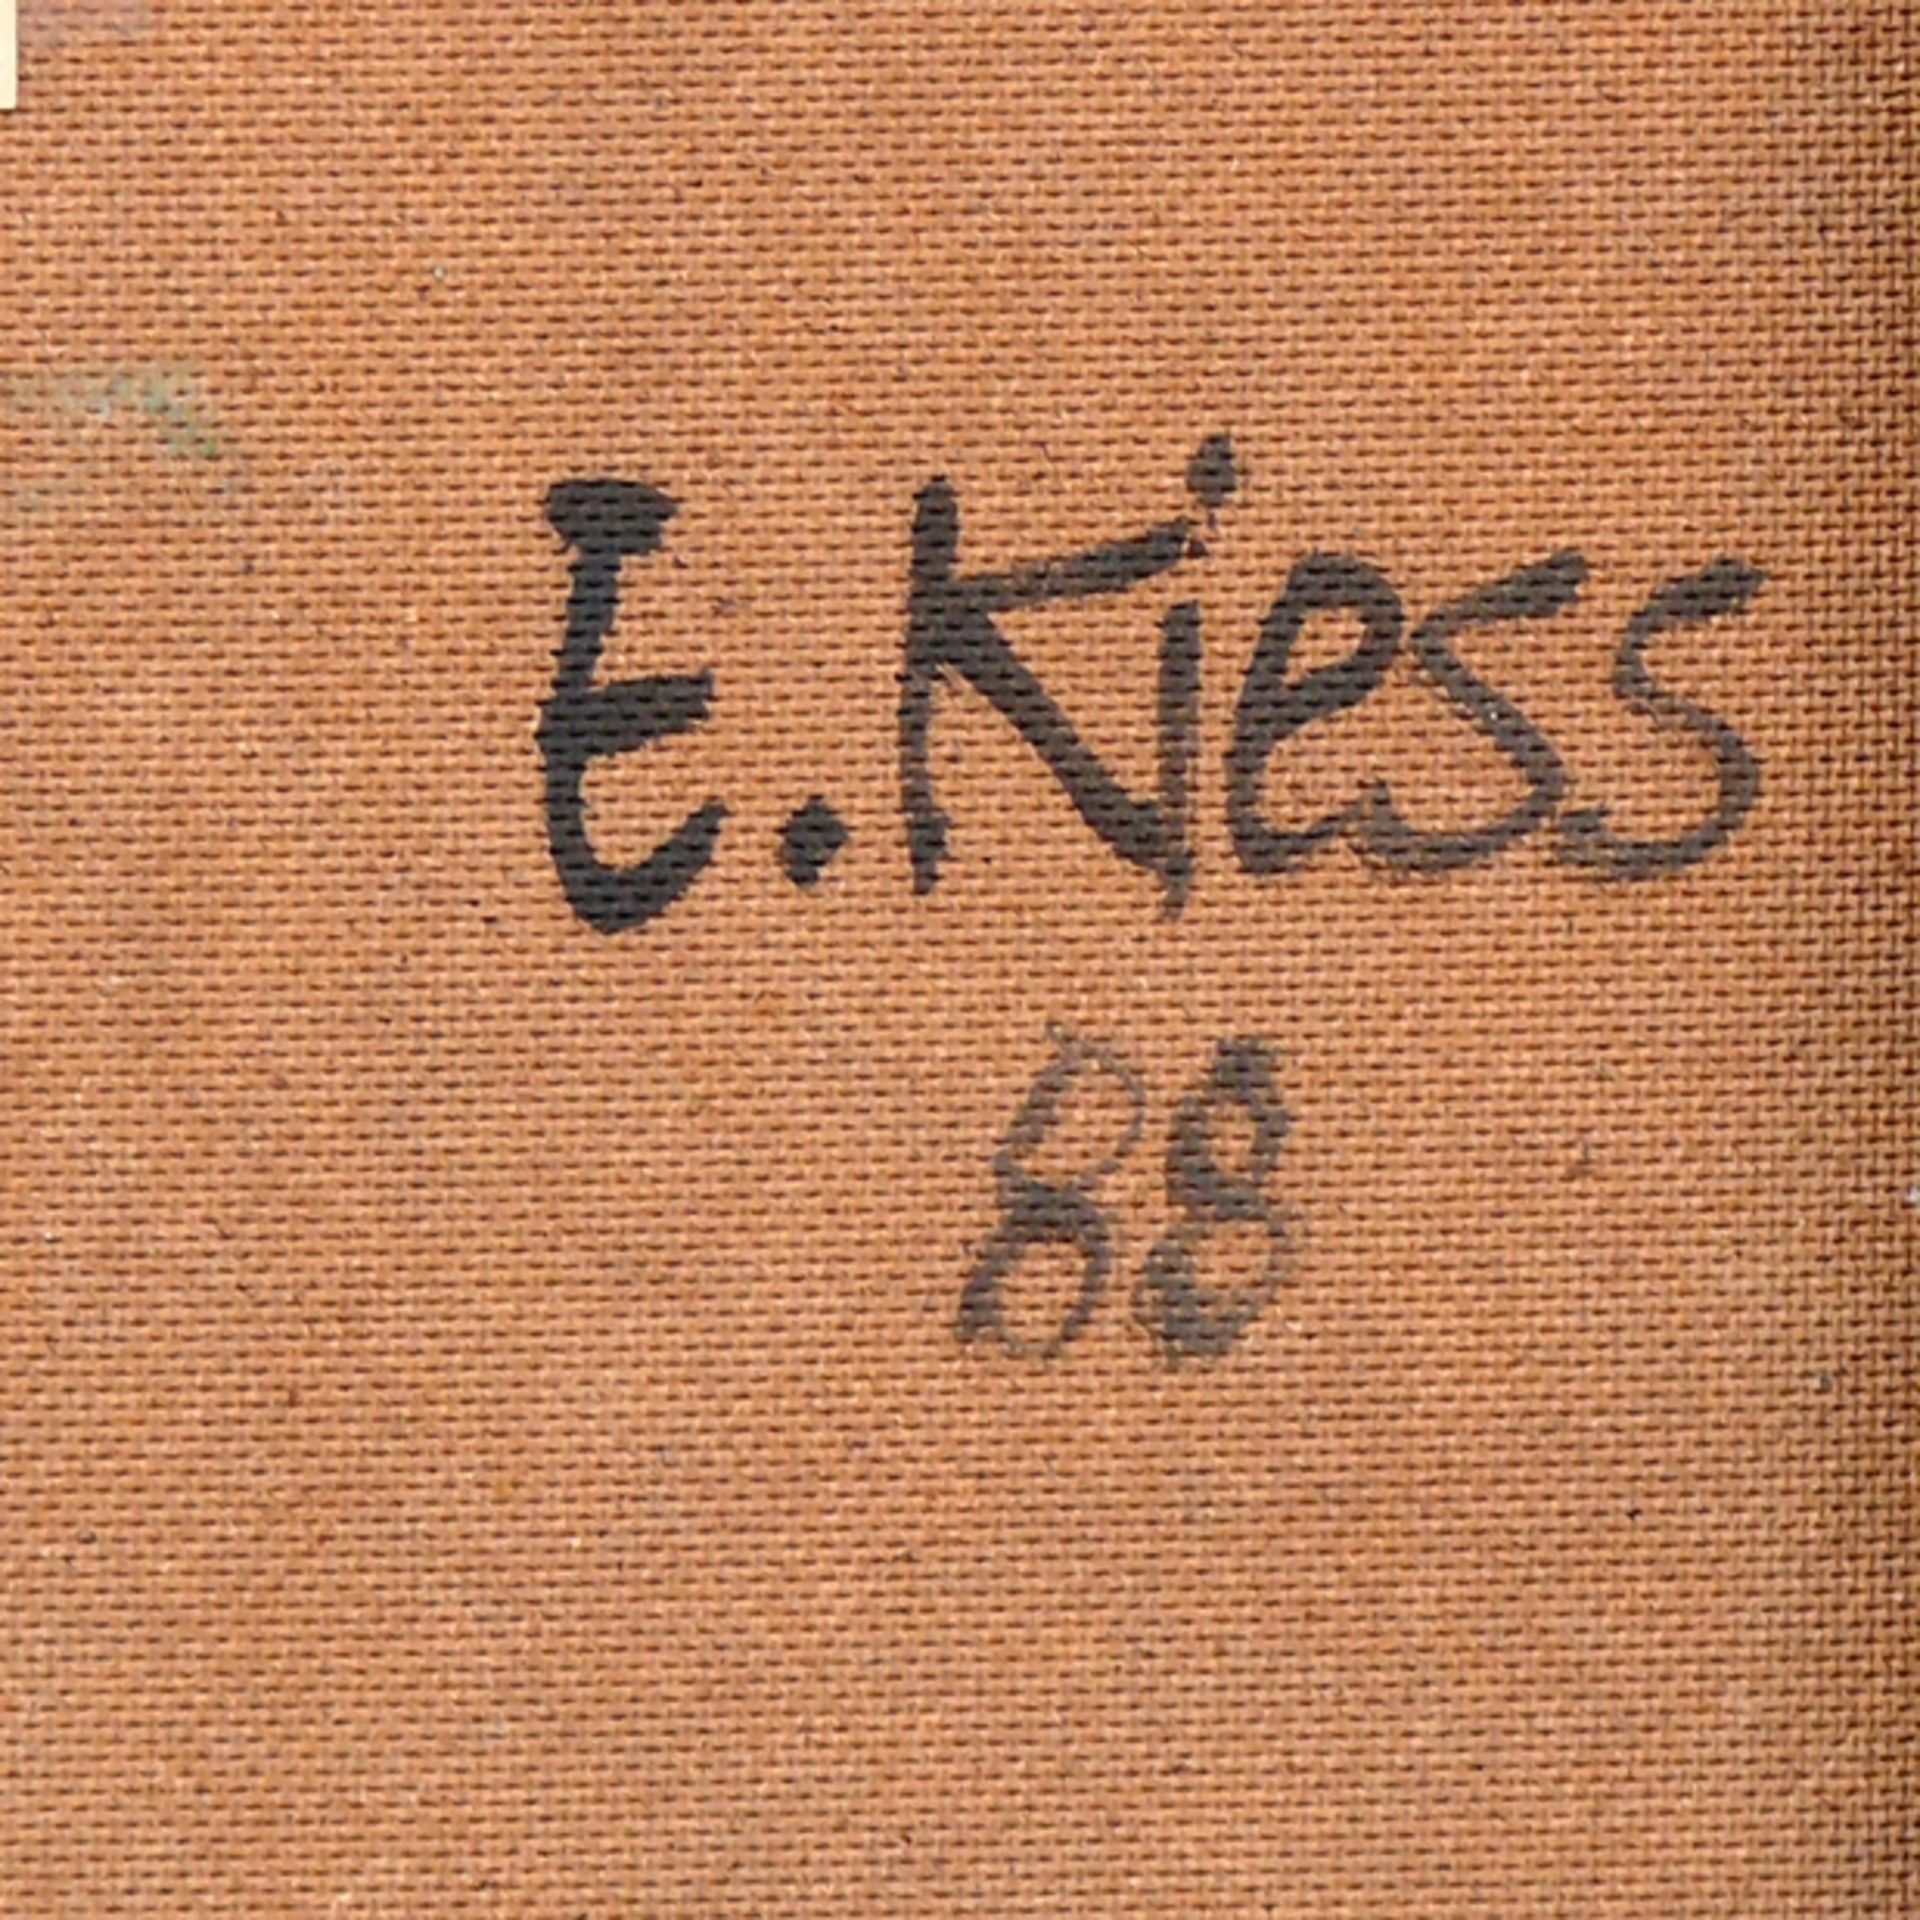 Kiess, Emil (geb. Trossingen 1930) - Bild 4 aus 5